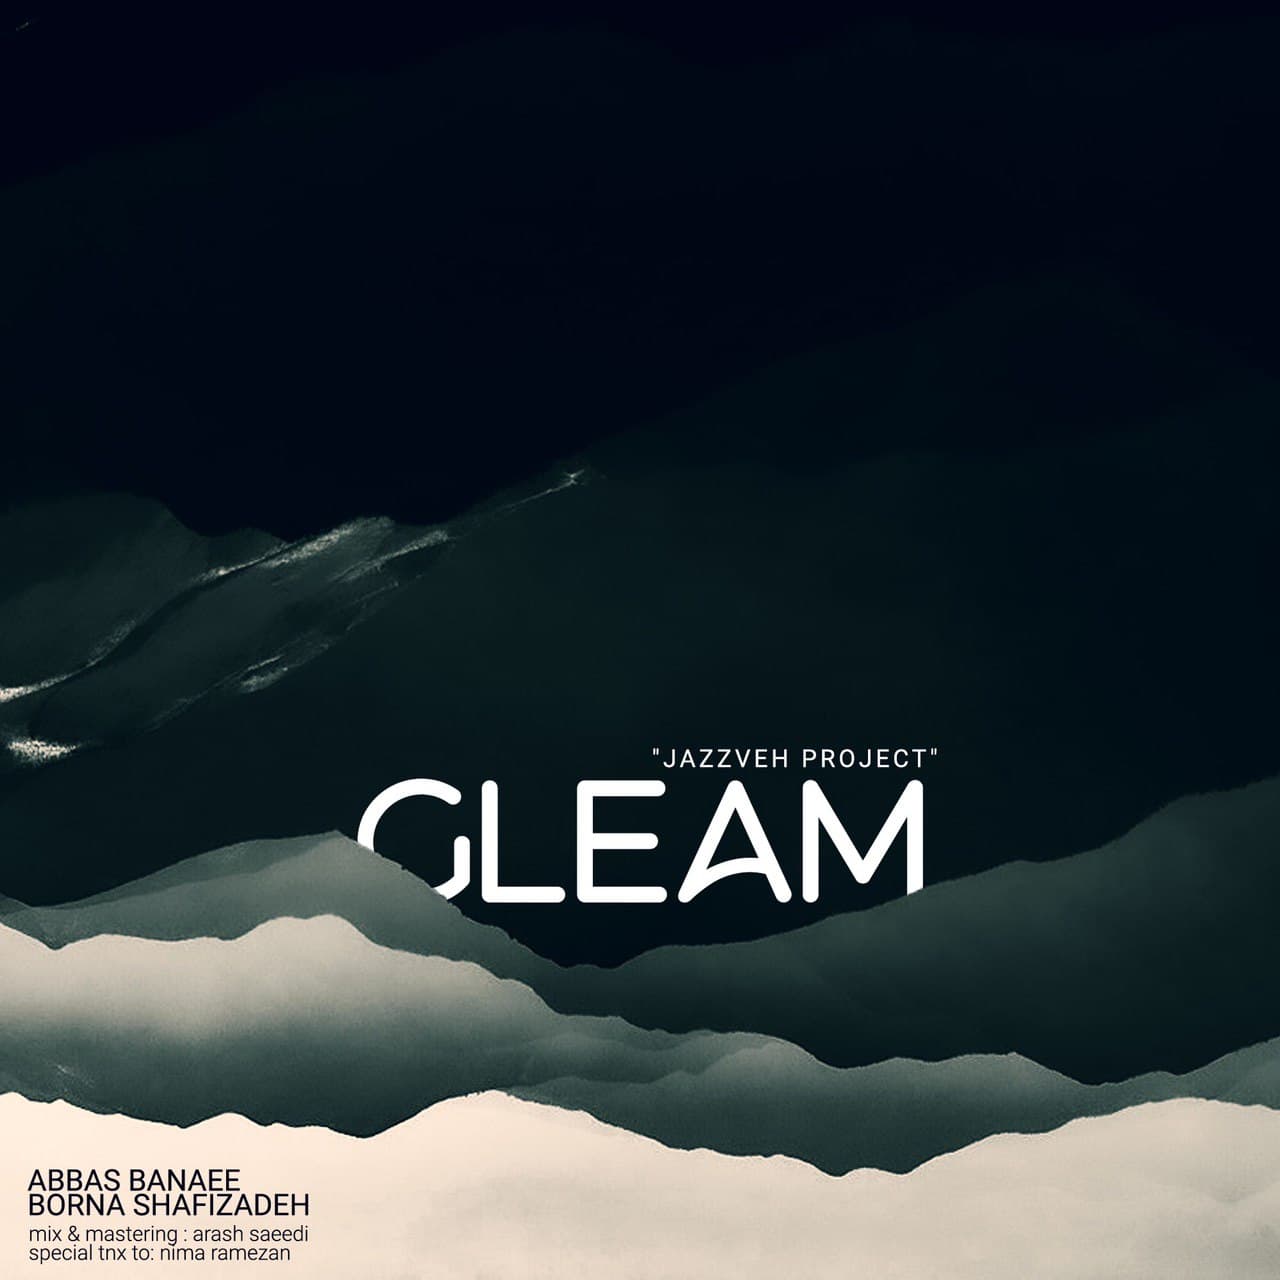 Gleam - jazzveh project